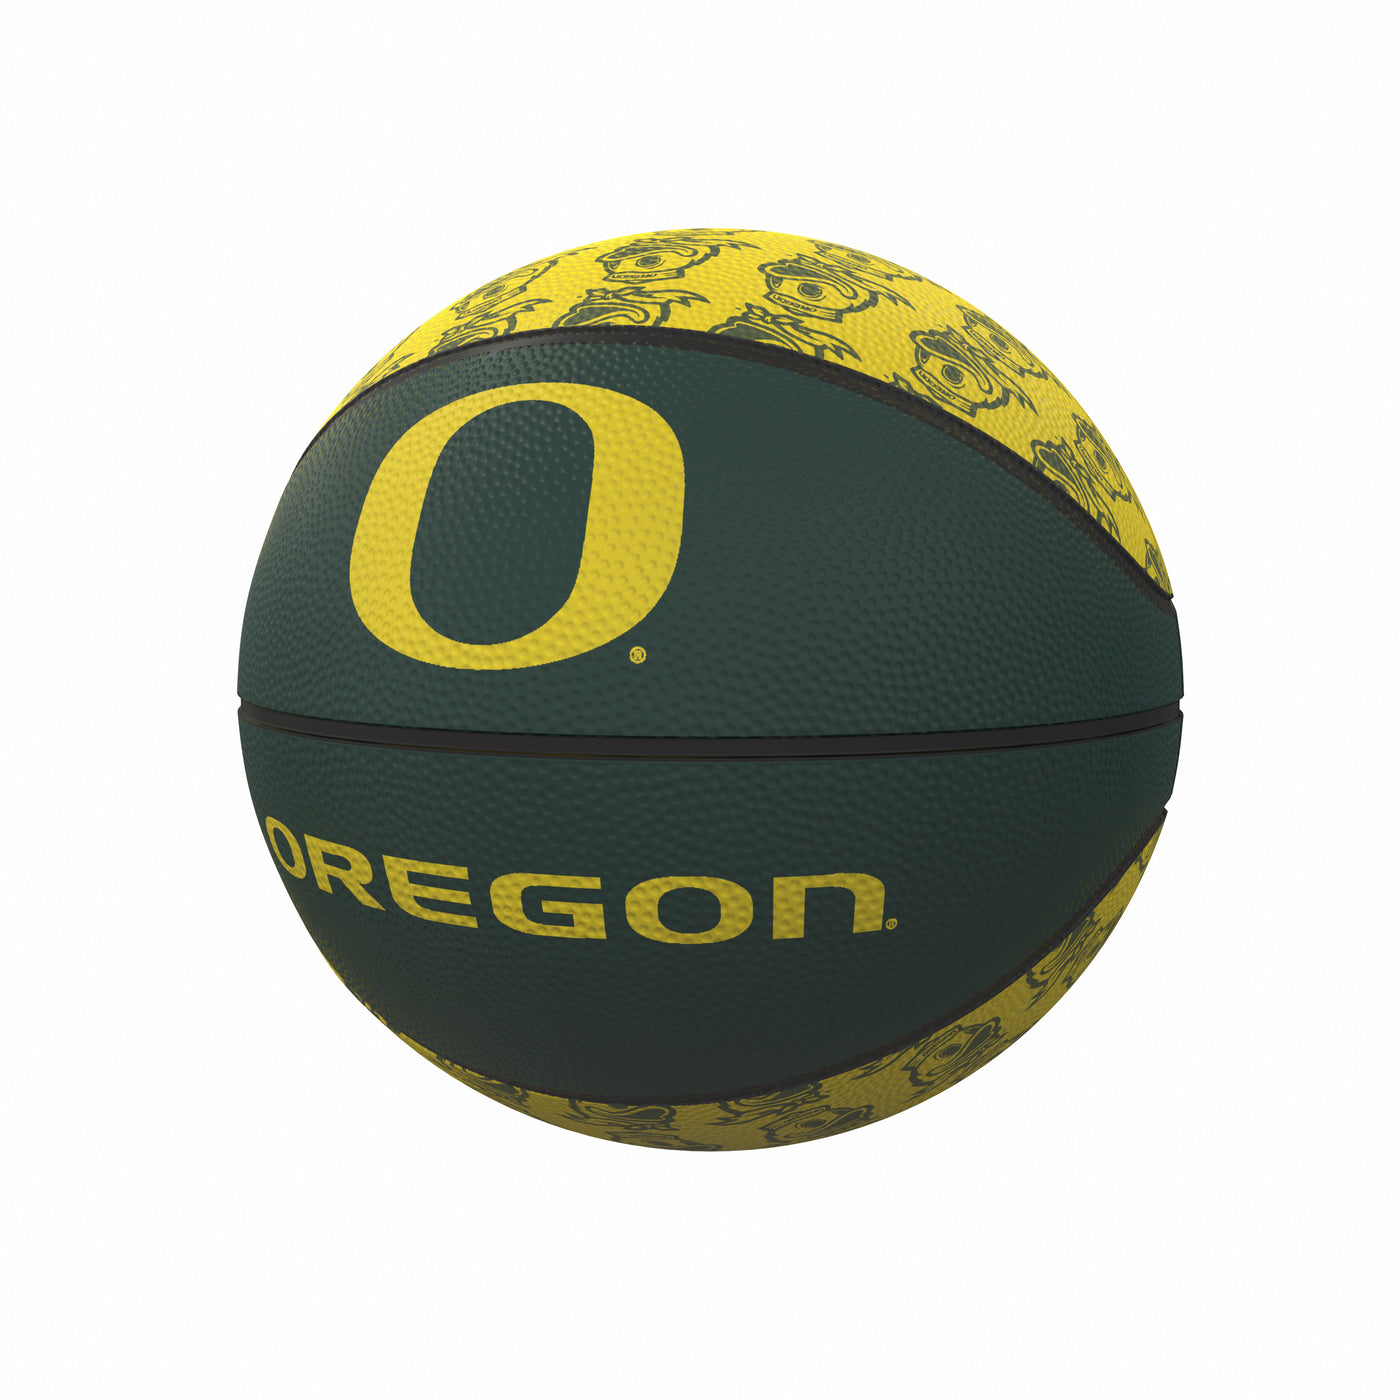 Oregon Repeating Logo Mini-Size Rubber Basketball